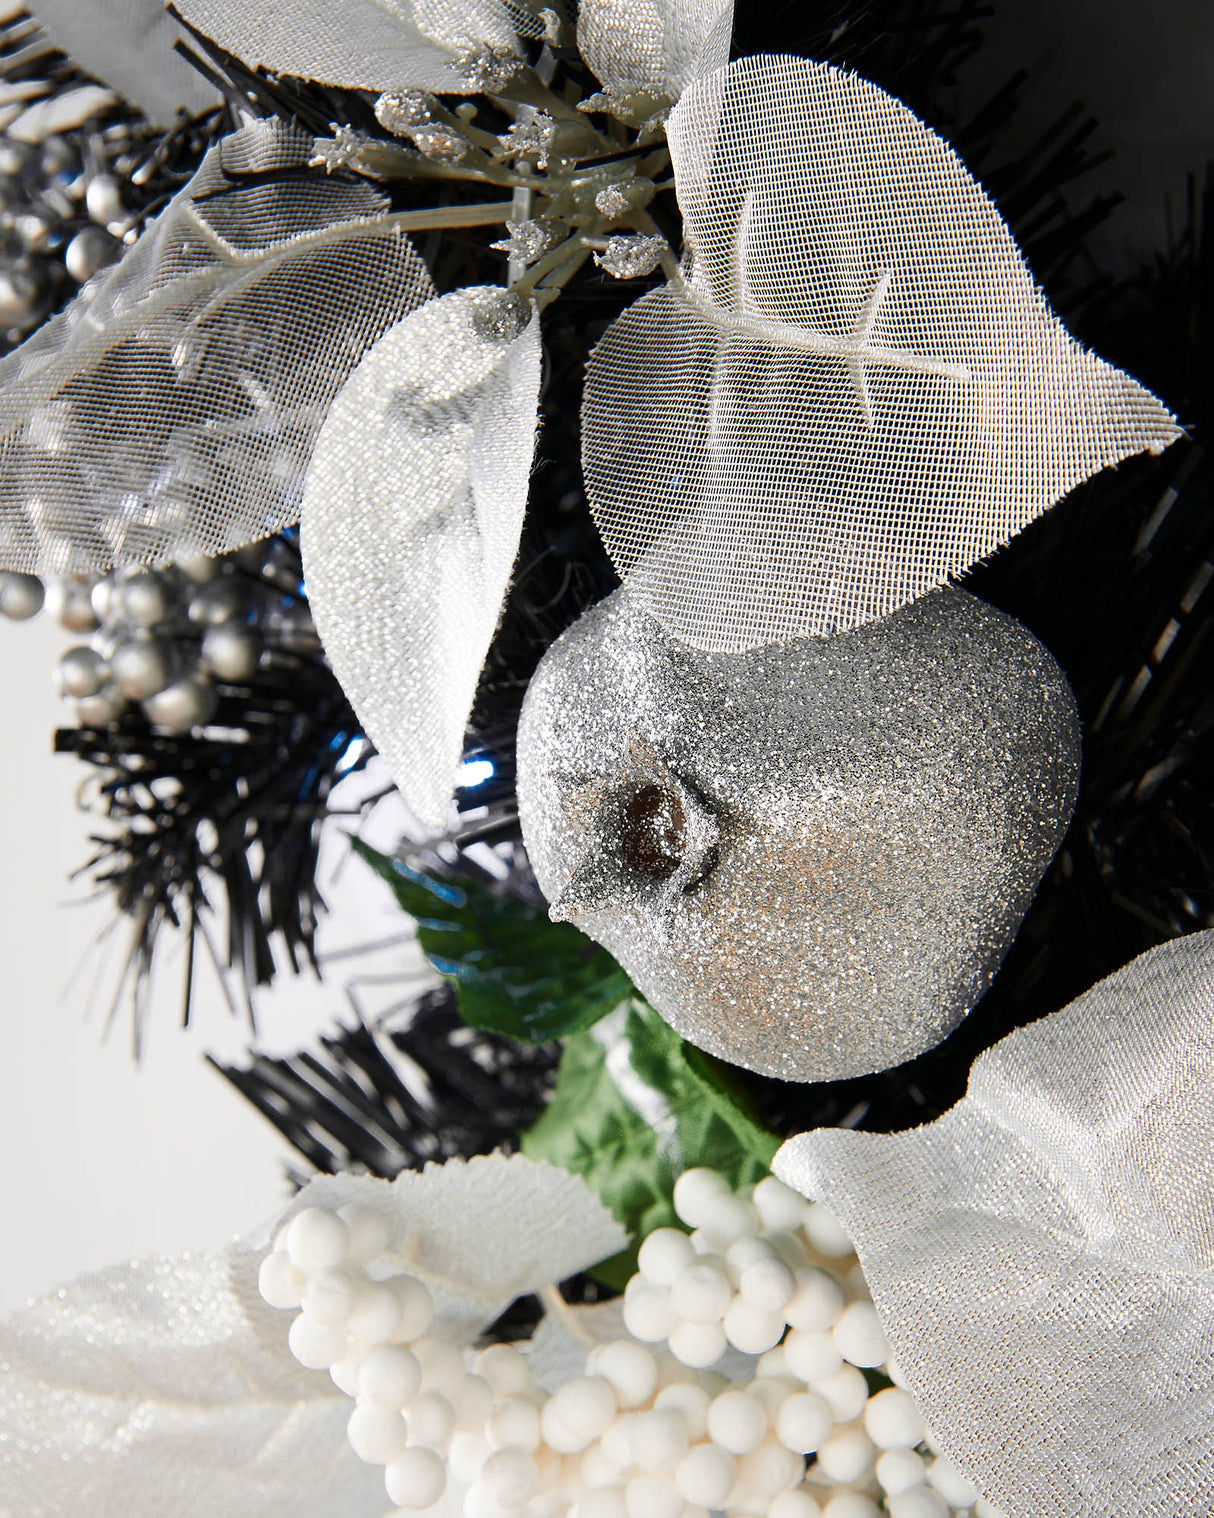 Pre-Lit Decorated Wreath, Black/Silver, 60 cm